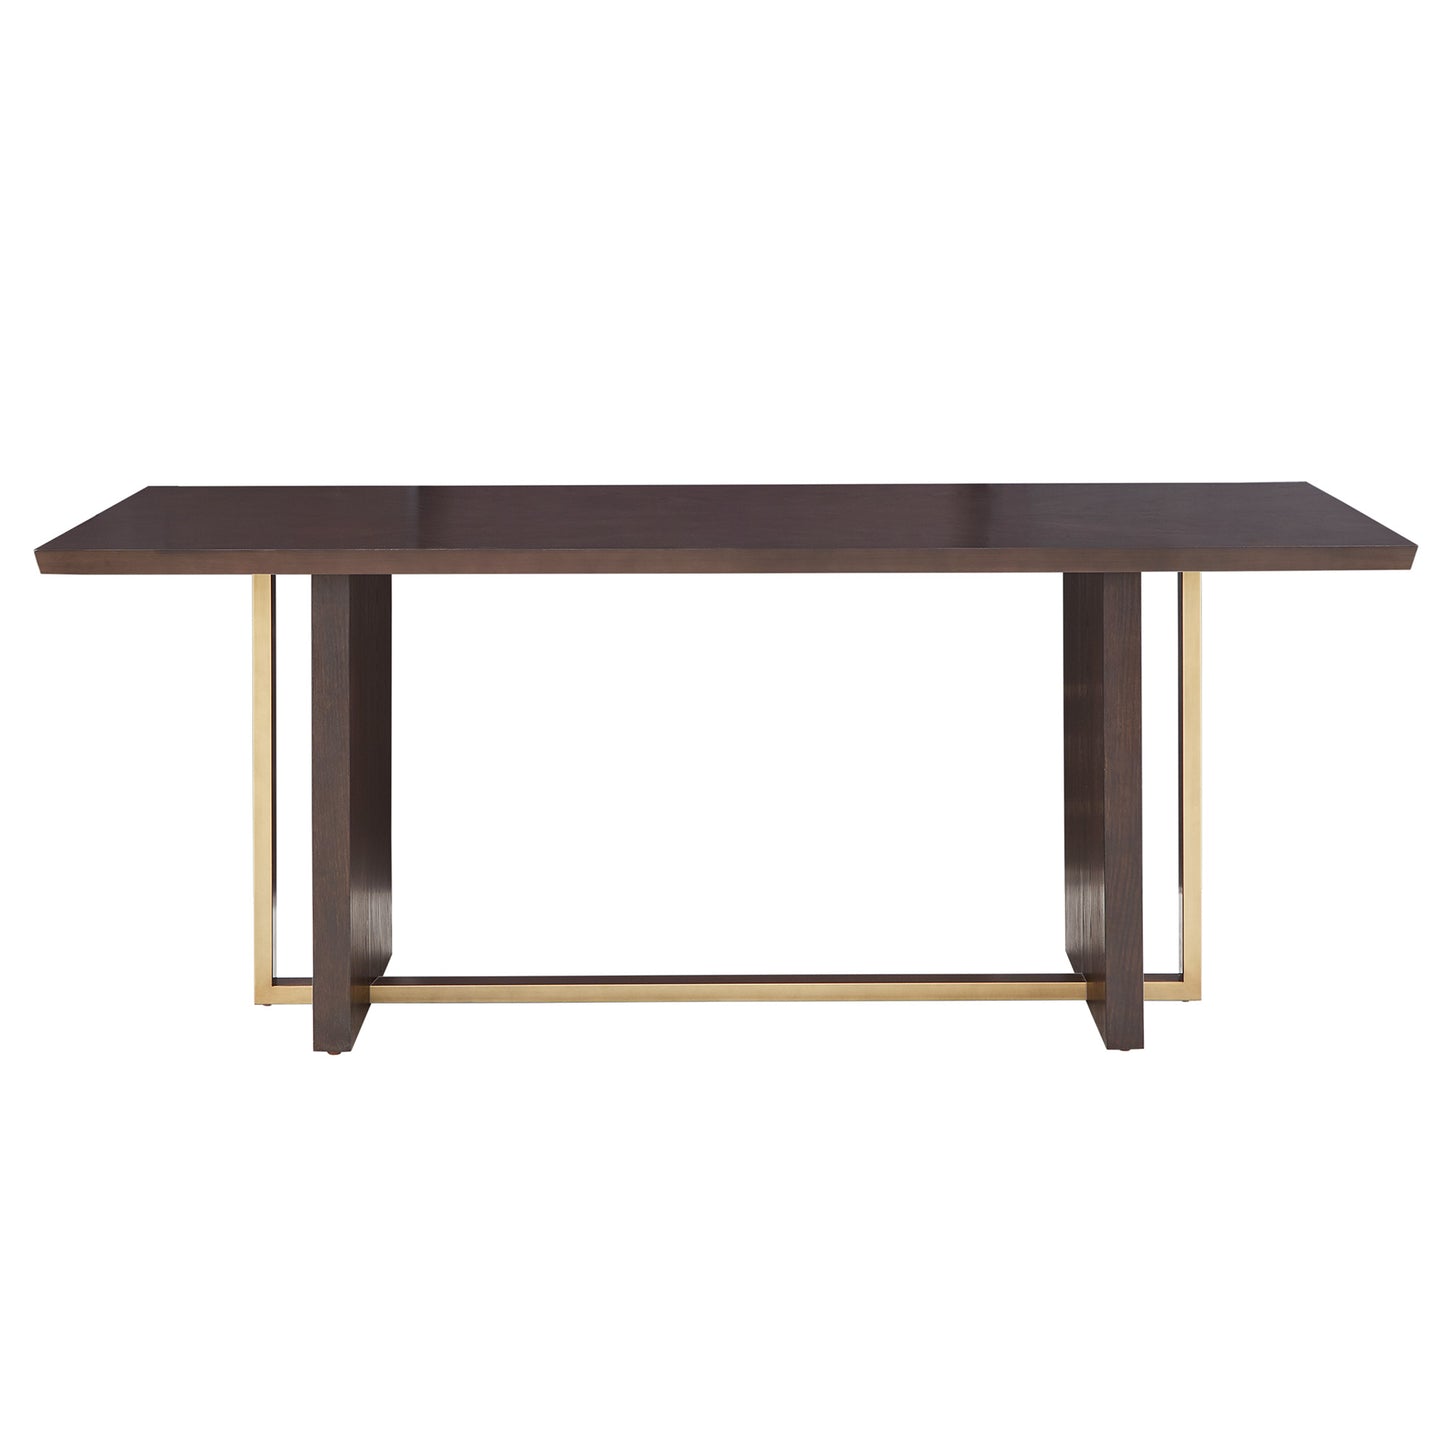 Espresso 78-inch Rectangular Dining Table